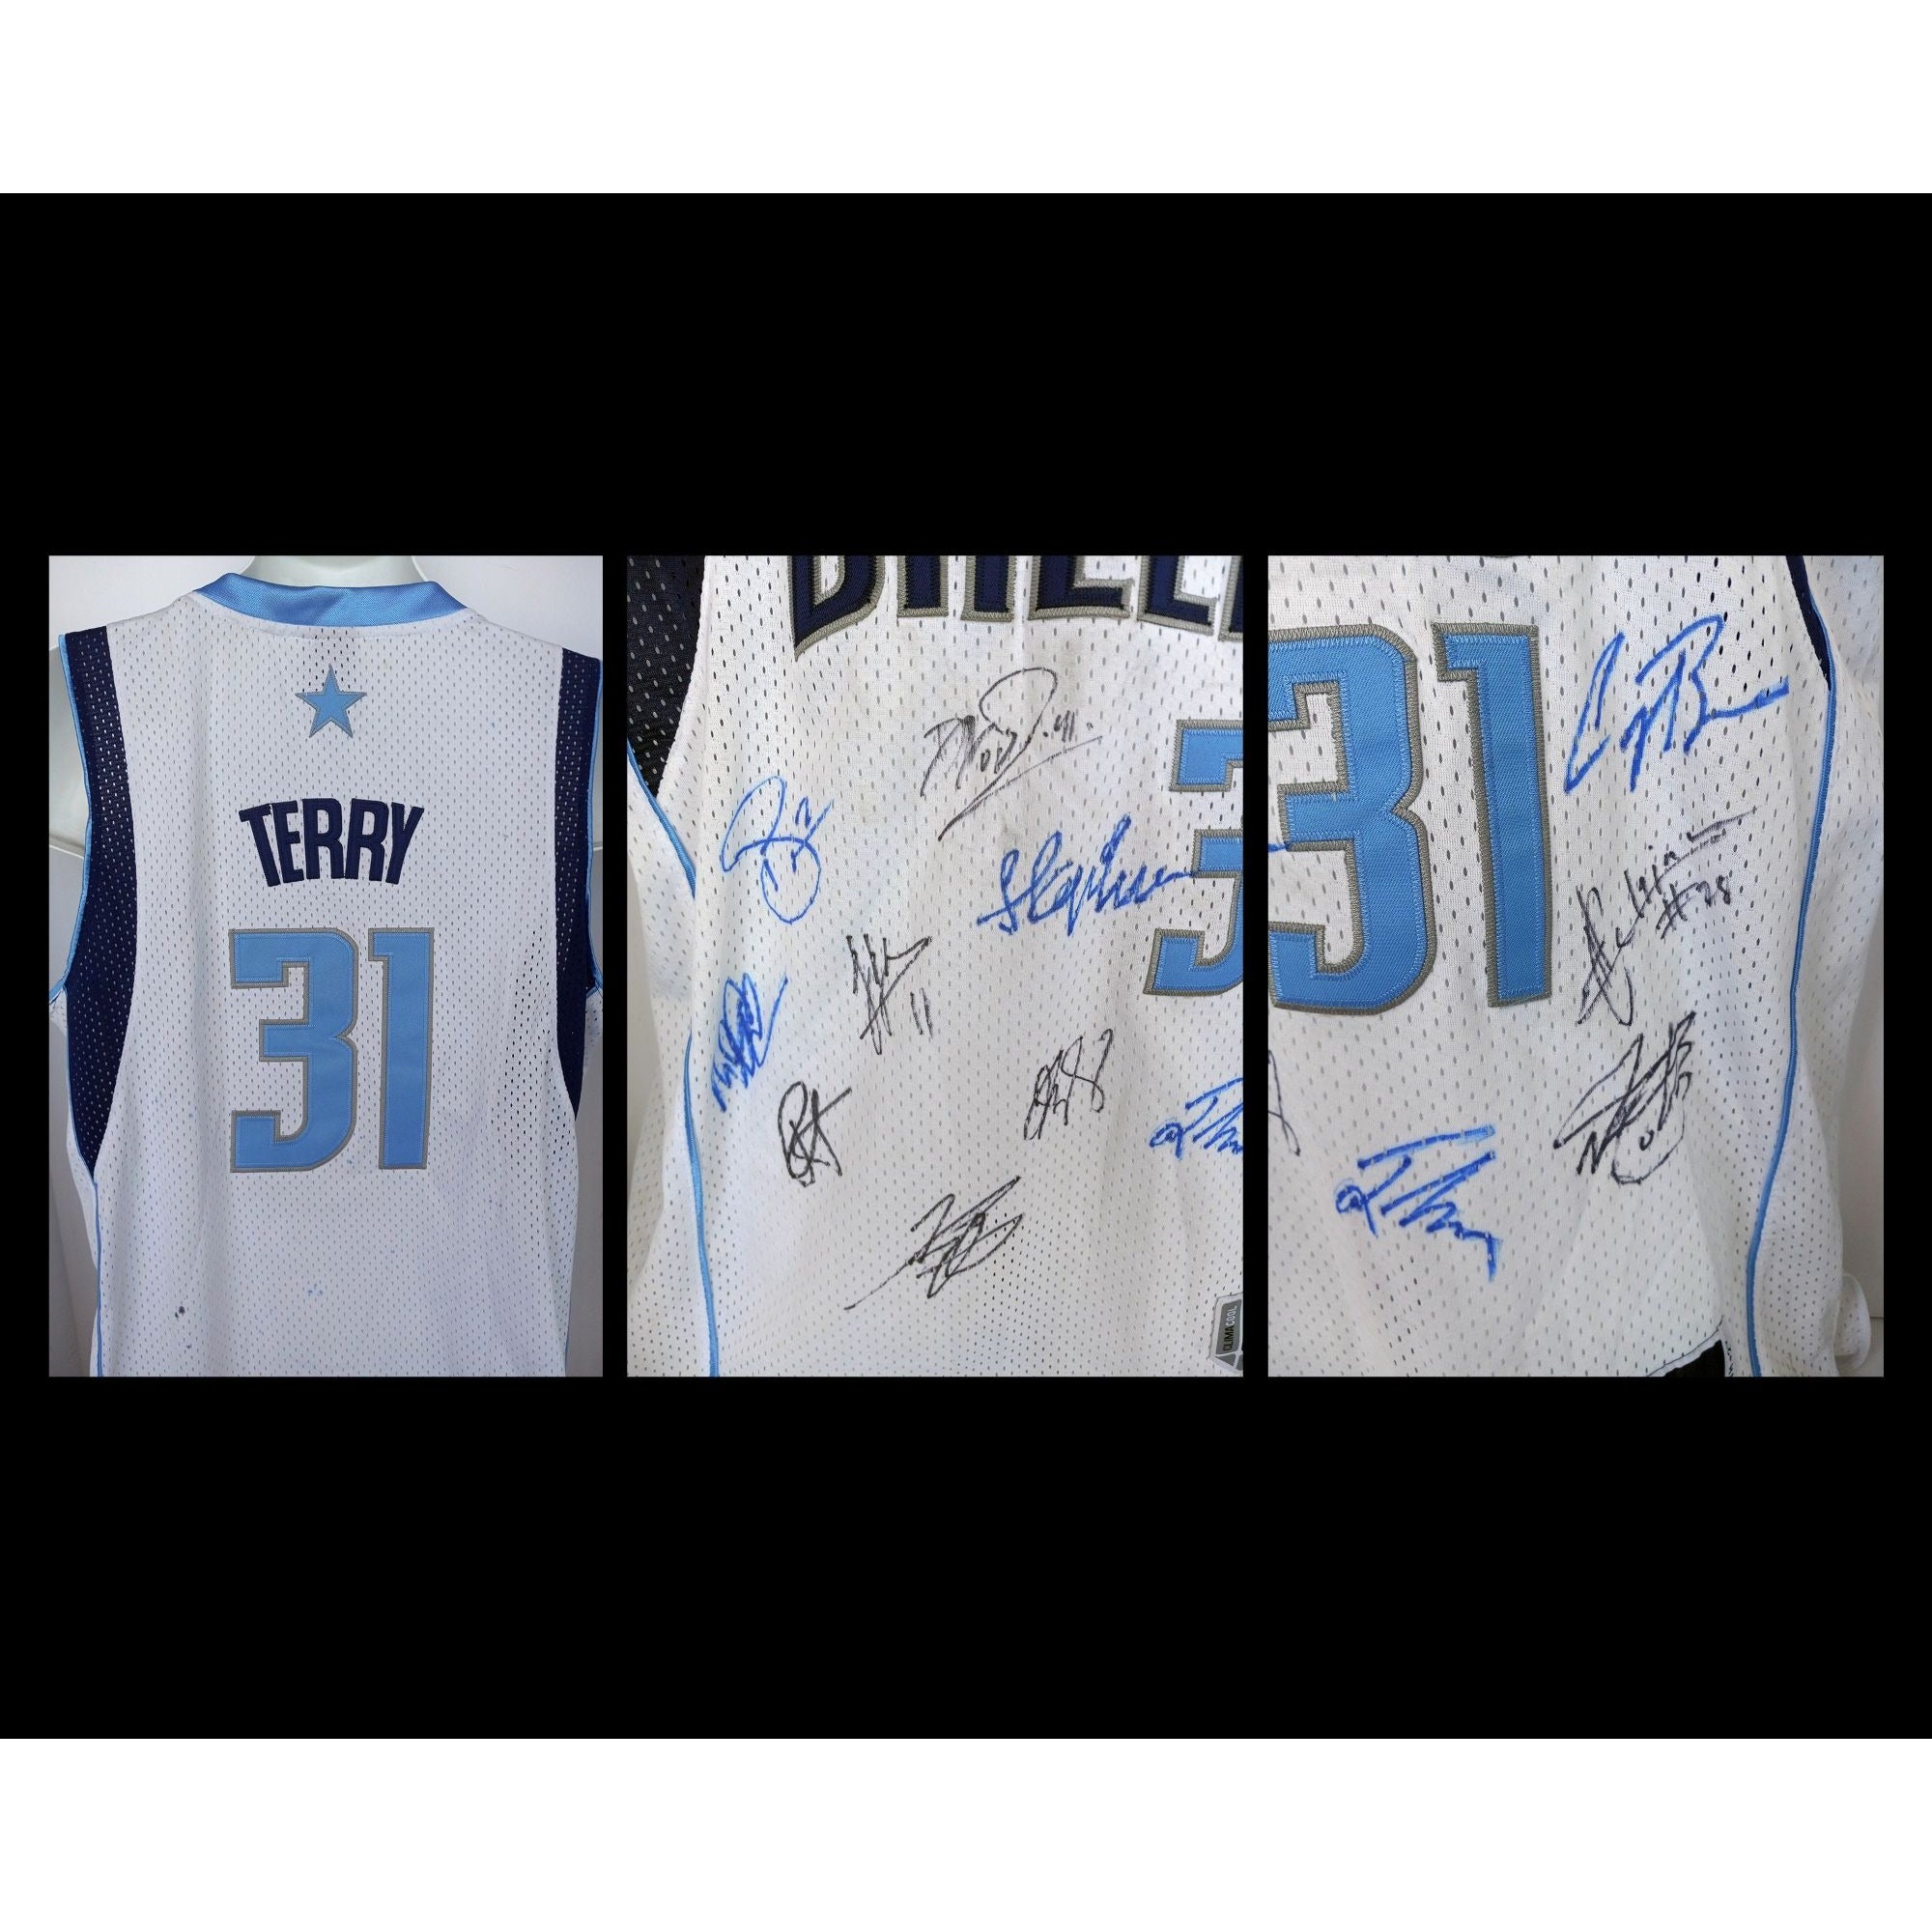 Dirk Nowitzki Autographed and Framed Dallas Mavericks Jersey